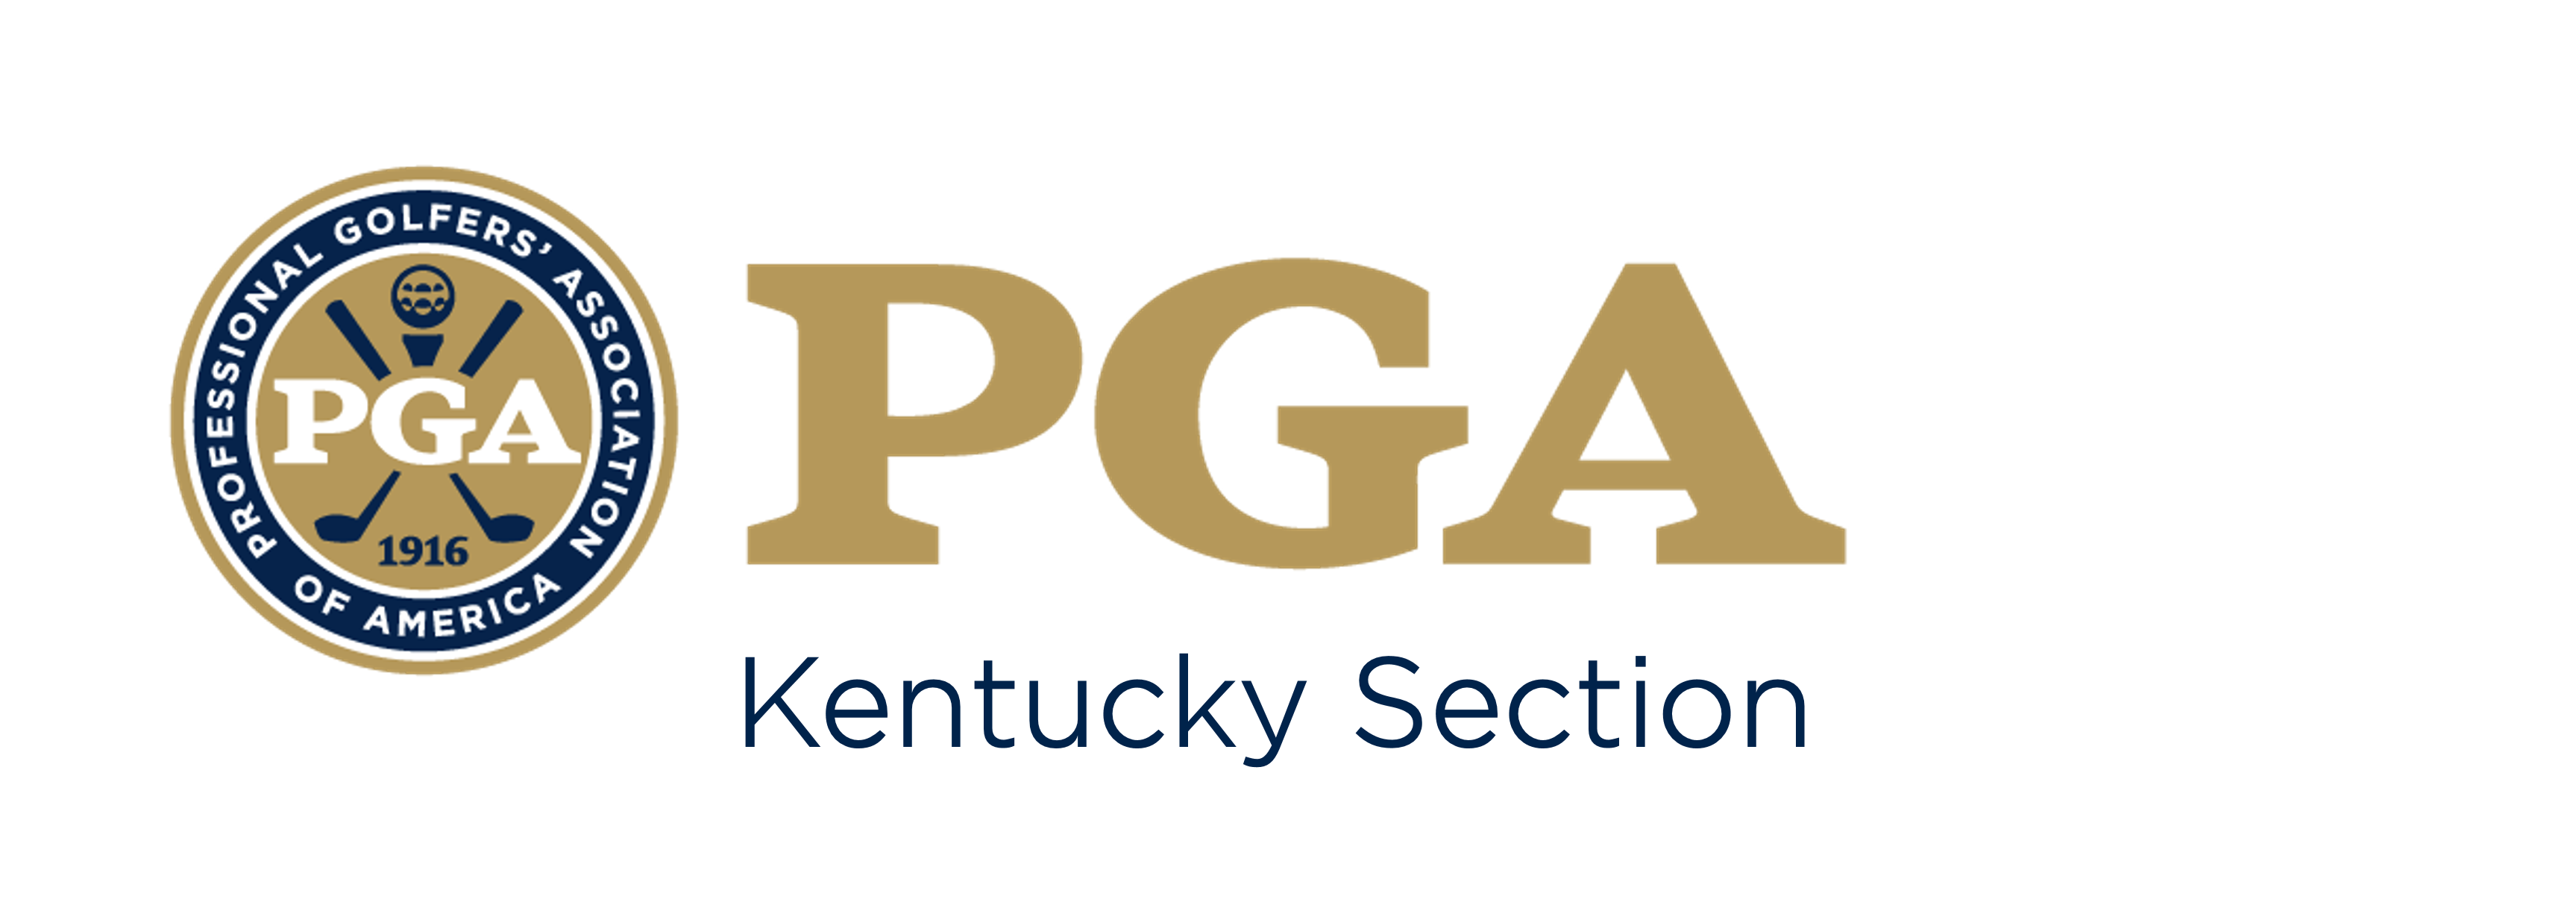 Kentucky PGA Hole In One Program